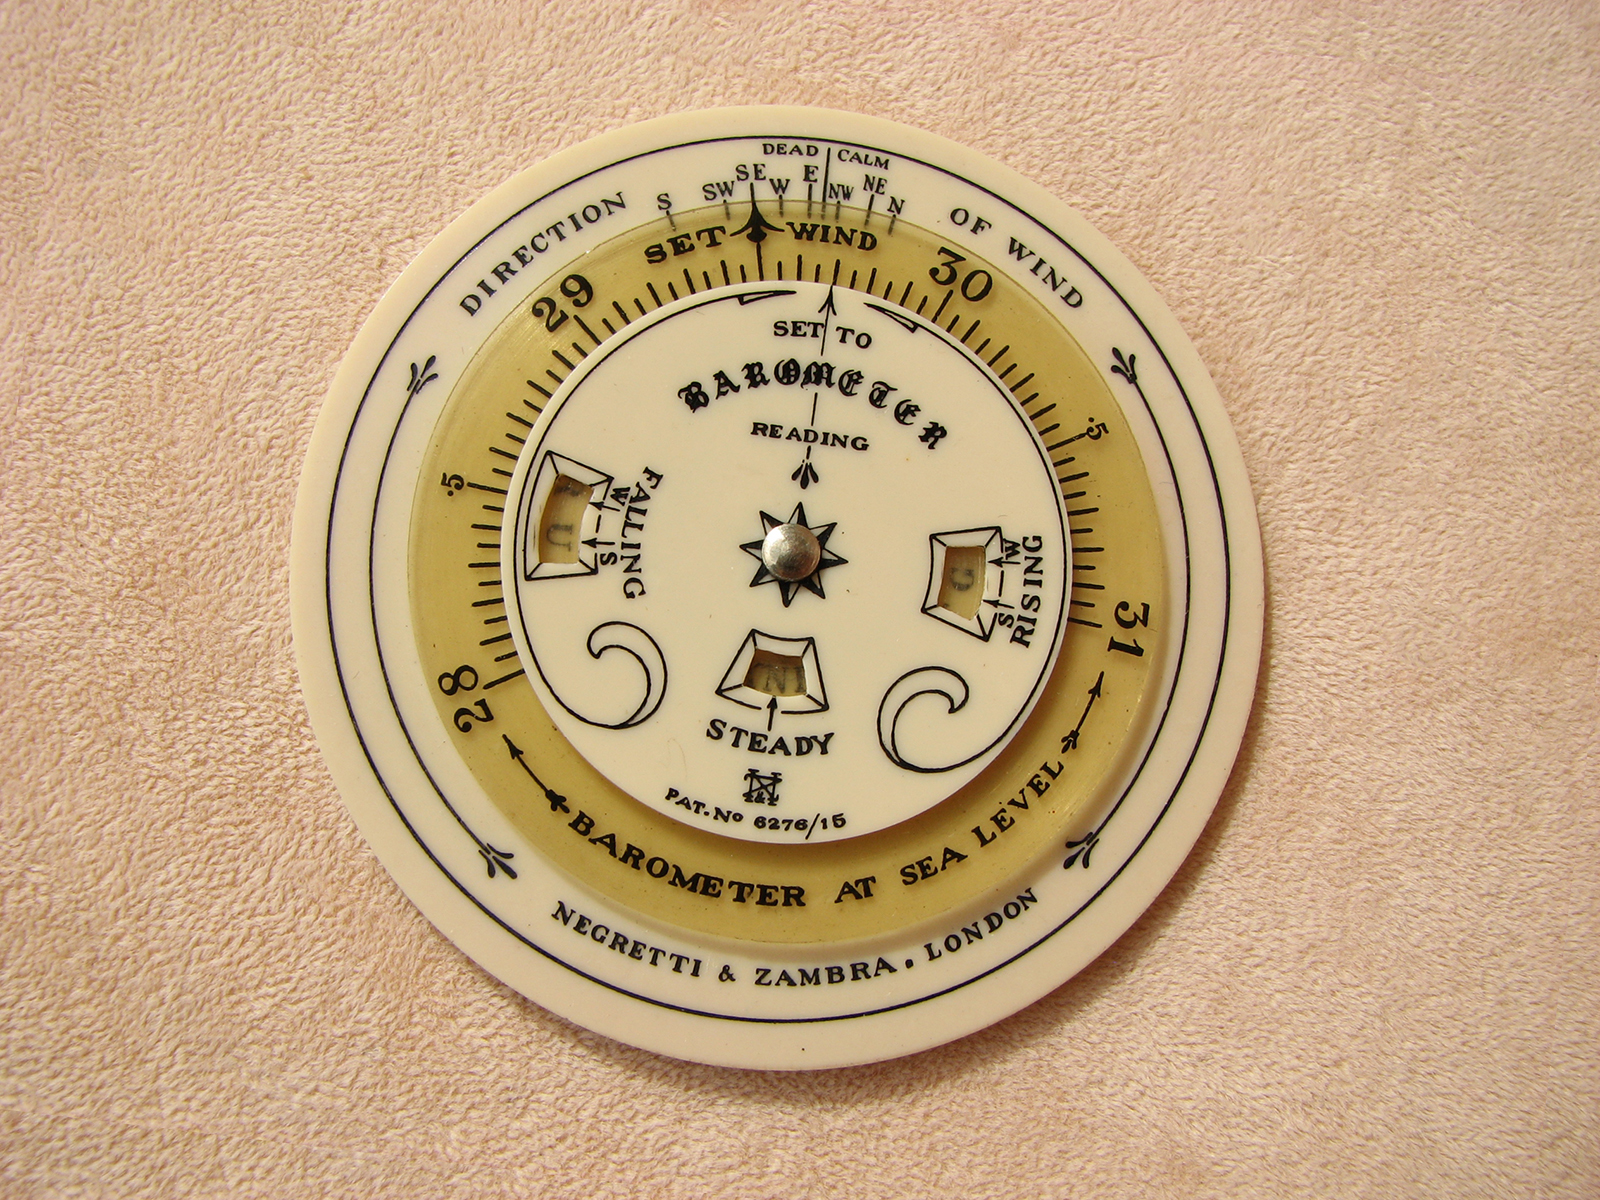 Genuine 1920's Negretti & Zambra pocket weather forecaster